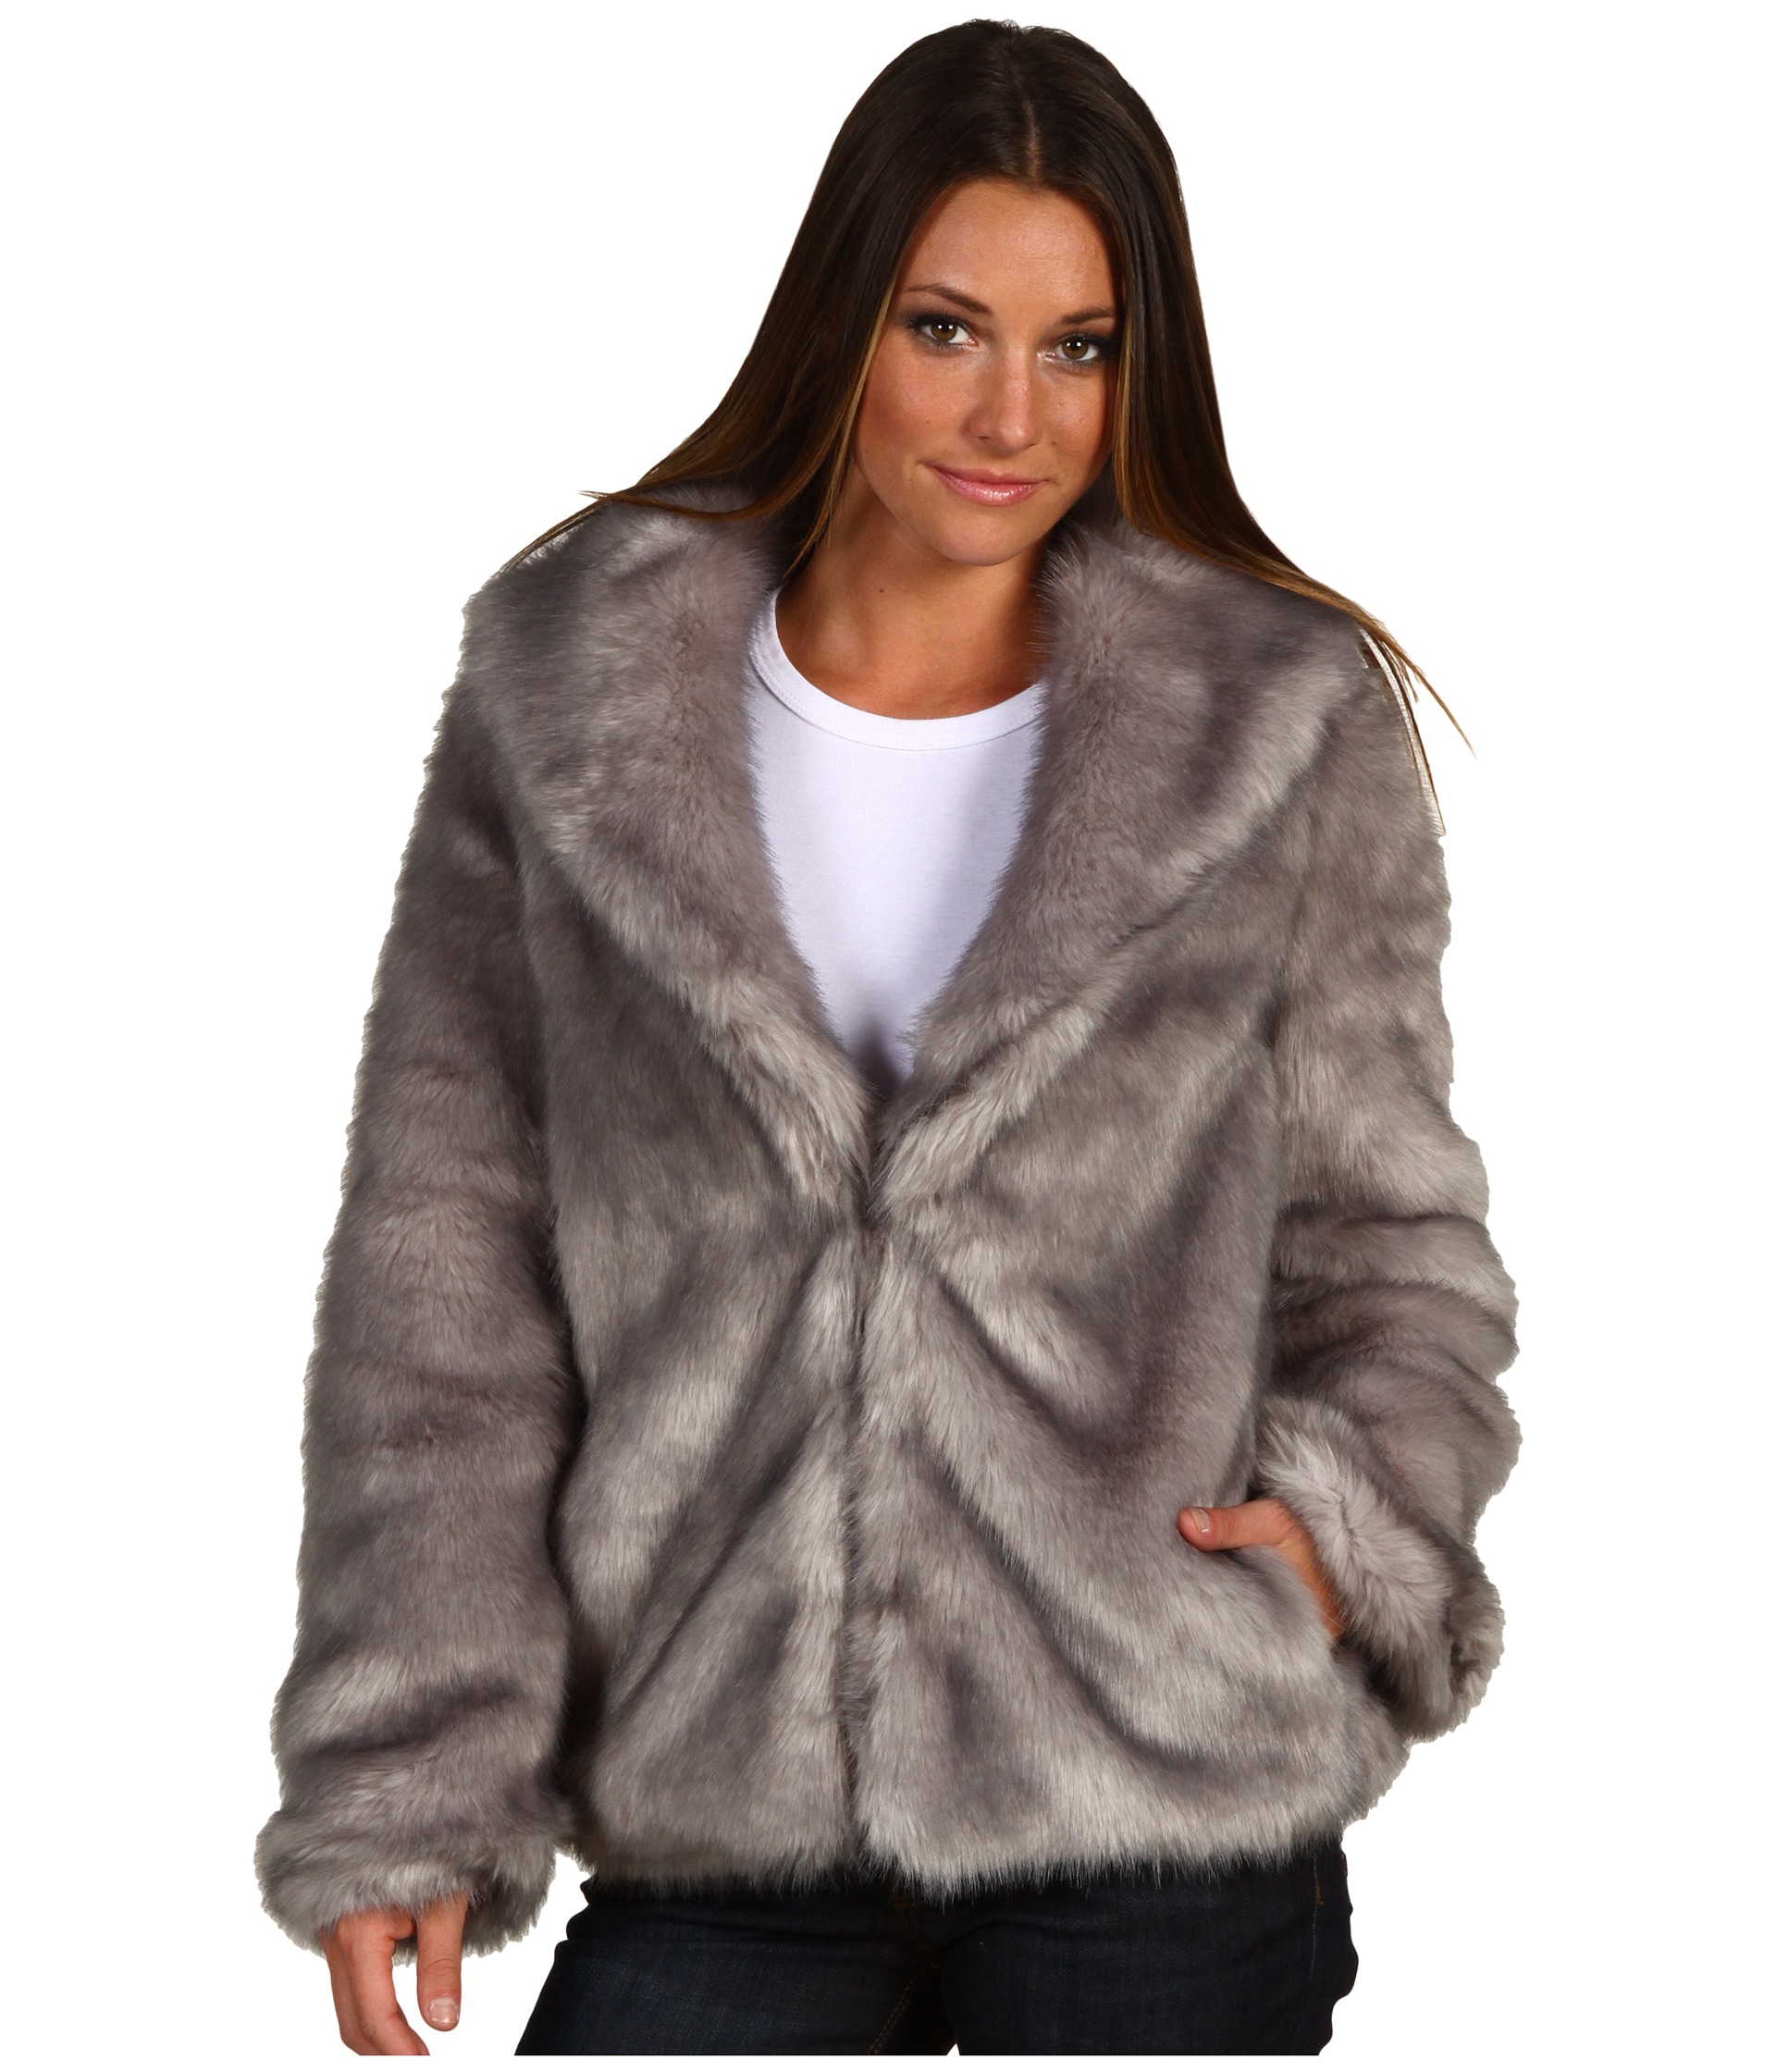 Halston Heritage Faux Fur Coat $284.99 (  MSRP $625.00)